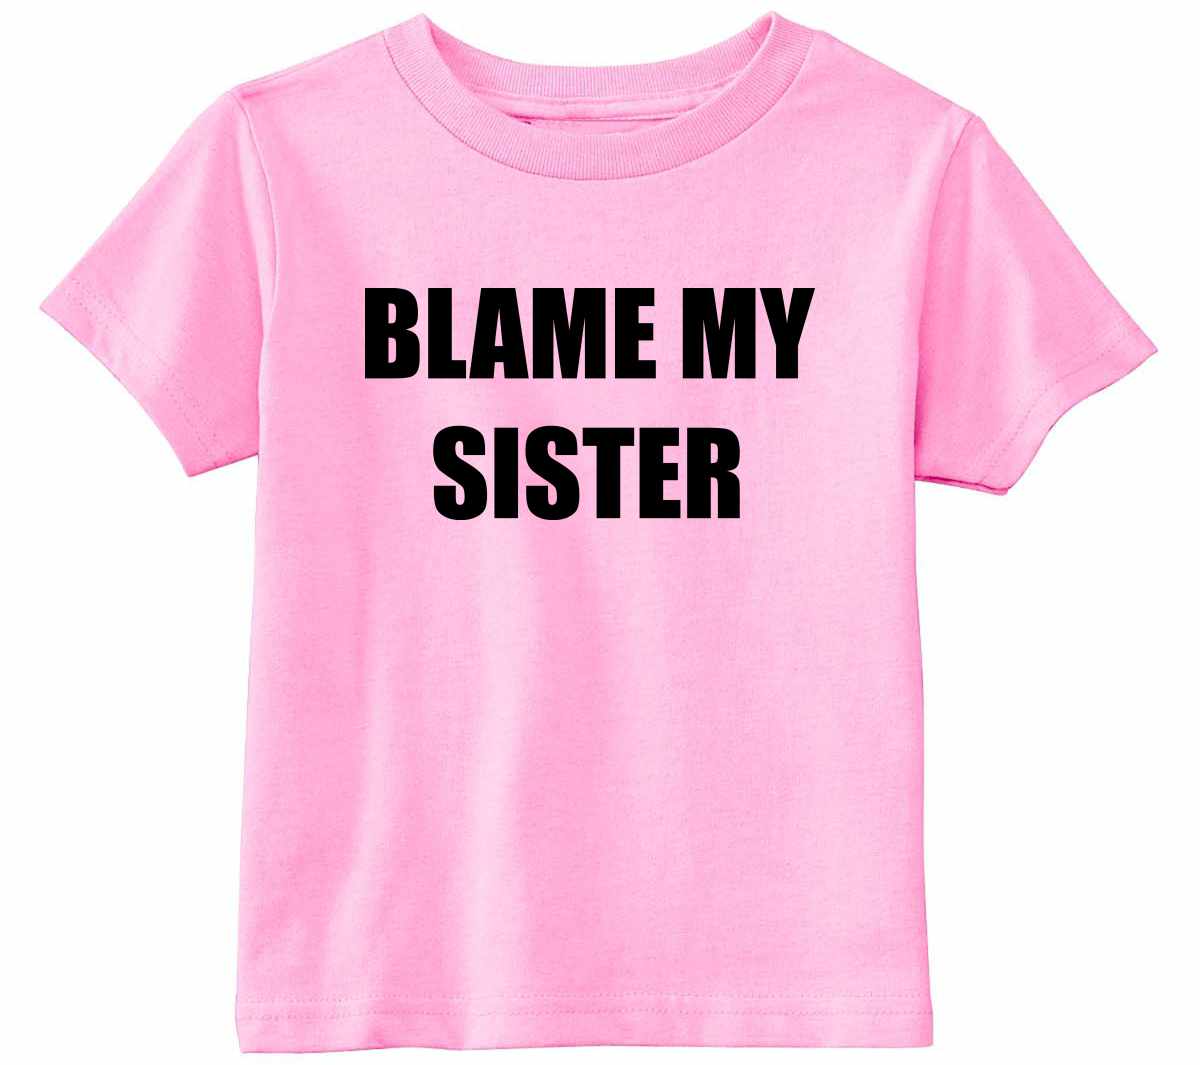 Blame My Sister Infant/Toddler 